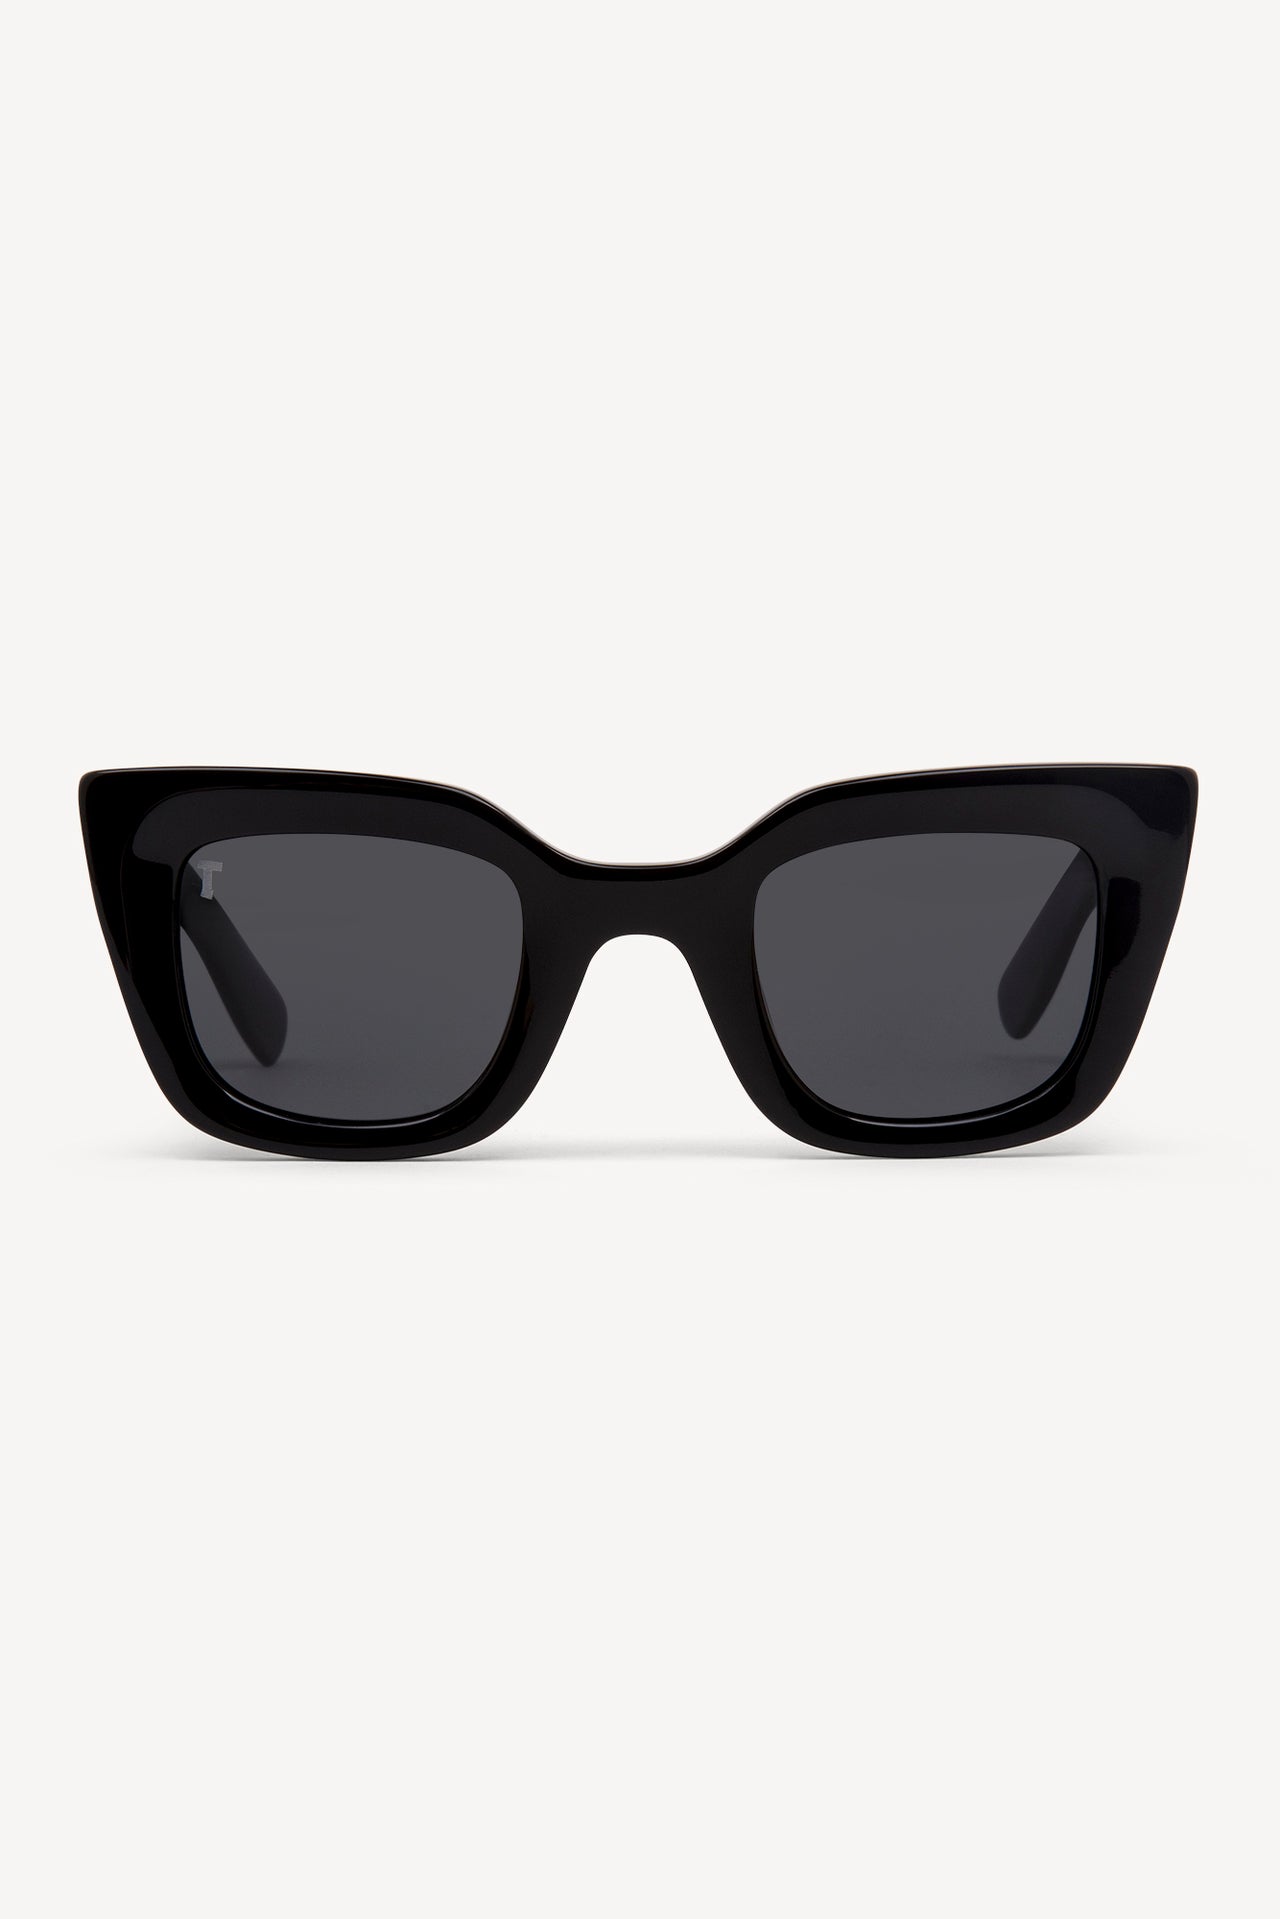 TOATIE Seoul Cat Eye Sunglasses BLACK/BLACK